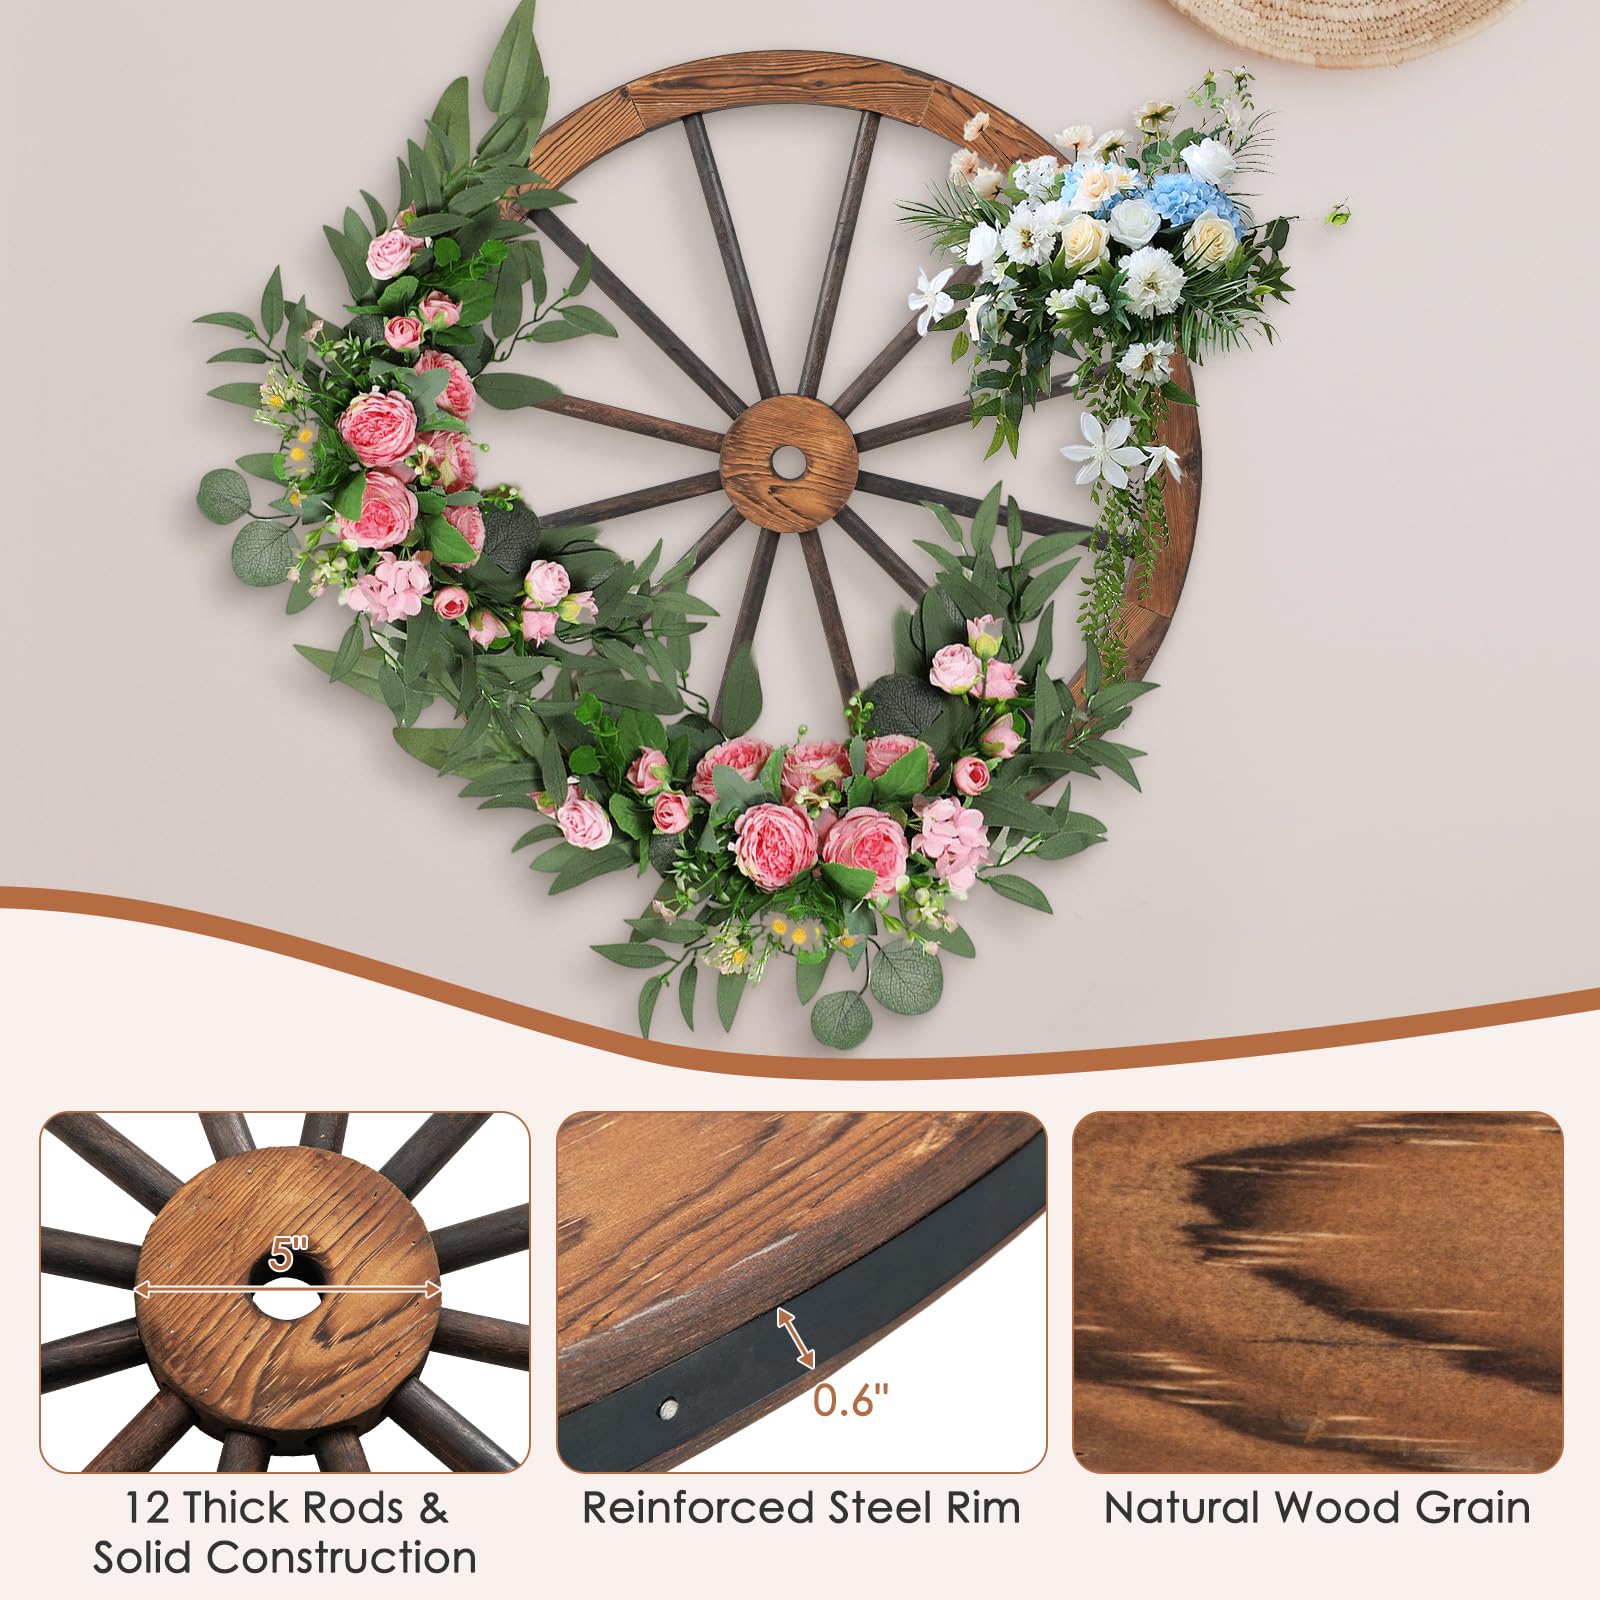 Giantex 30-Inch Wagon Wheels 4 Pieces, Decorative Wooden Wheels